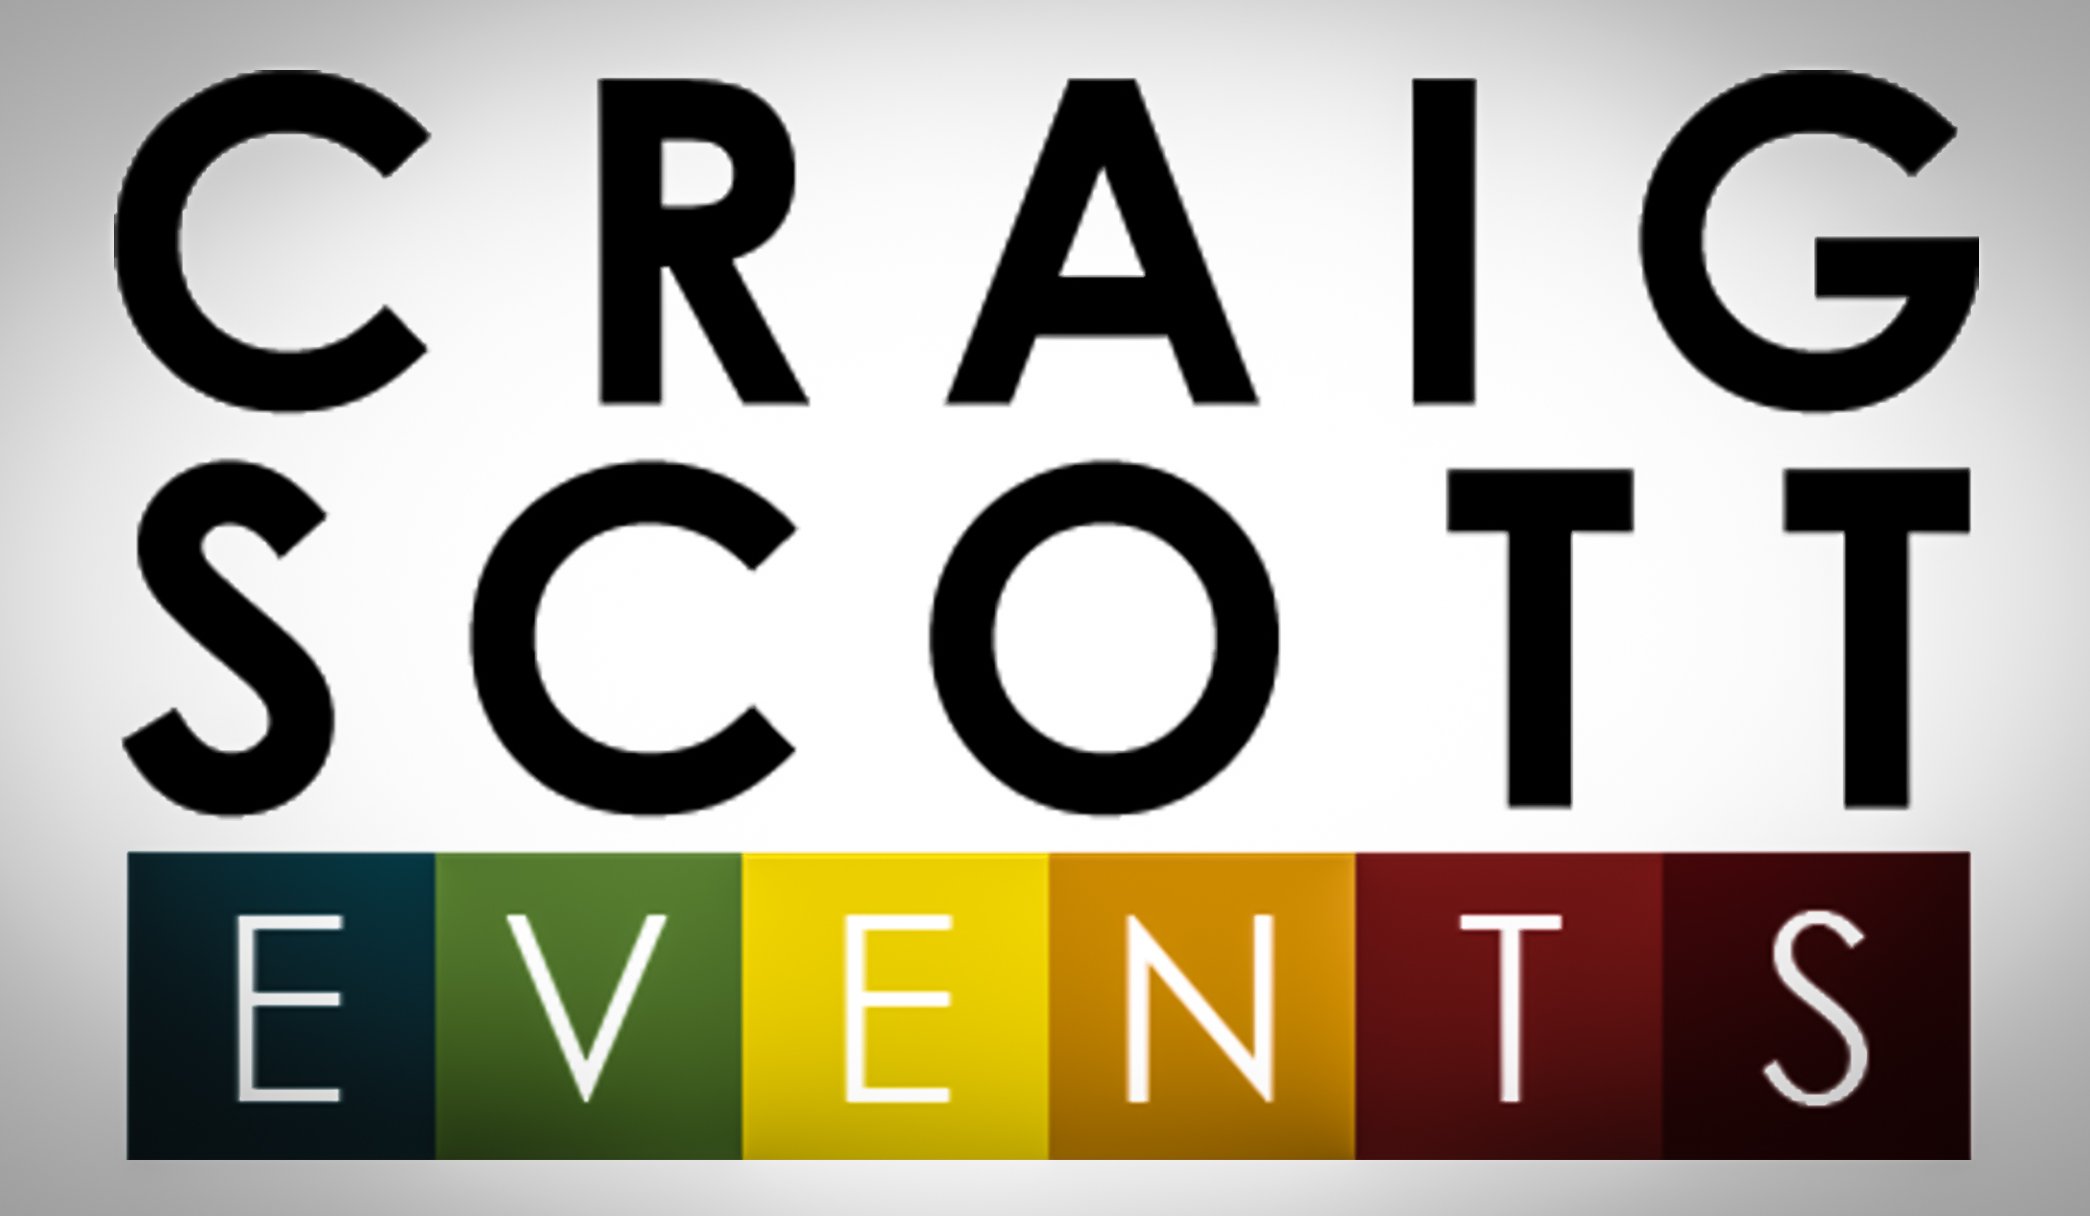 Craig Scott Events - Stories That Inspire